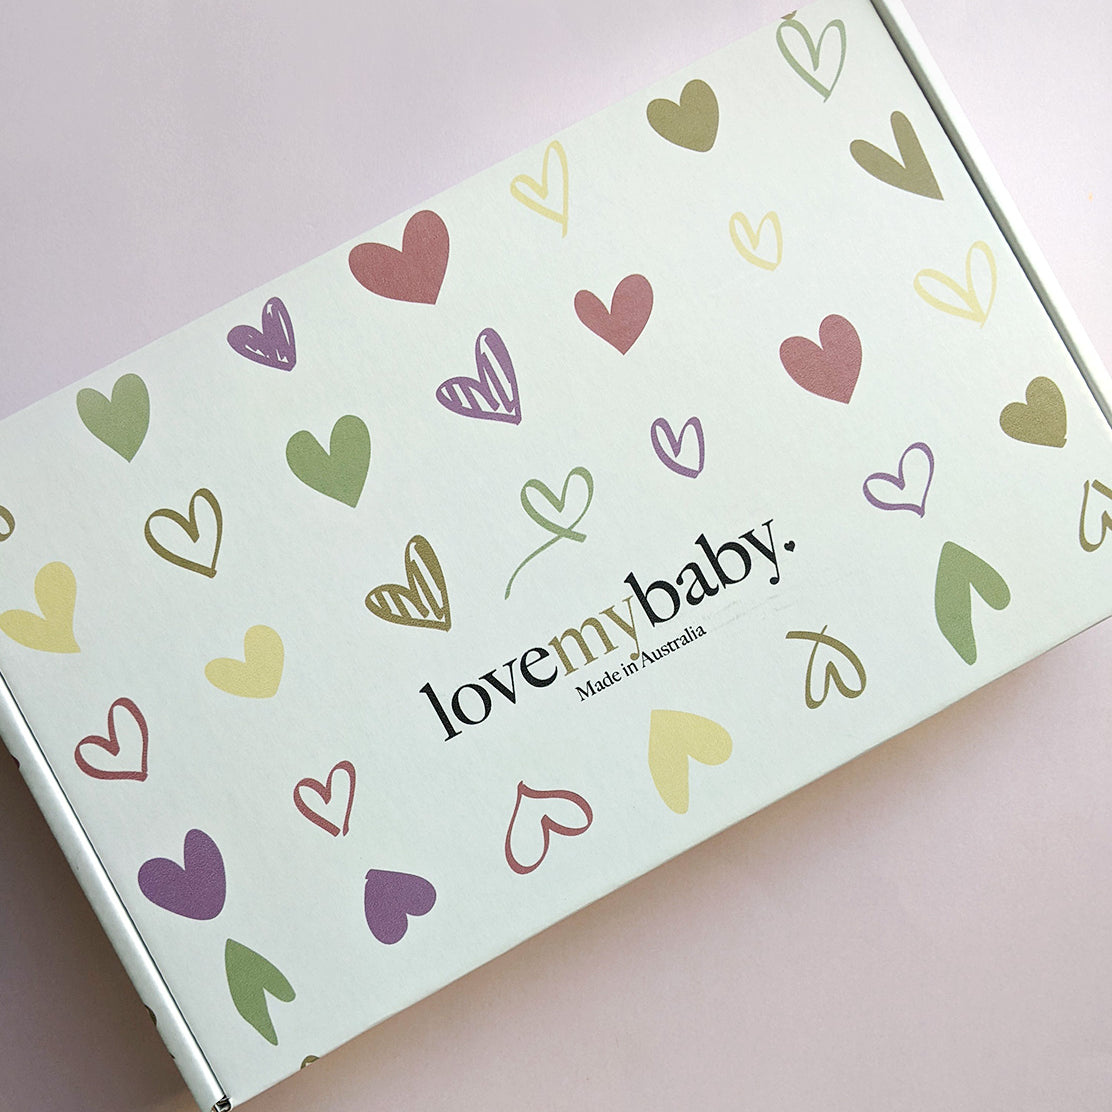 Love My Baby gift box packaging